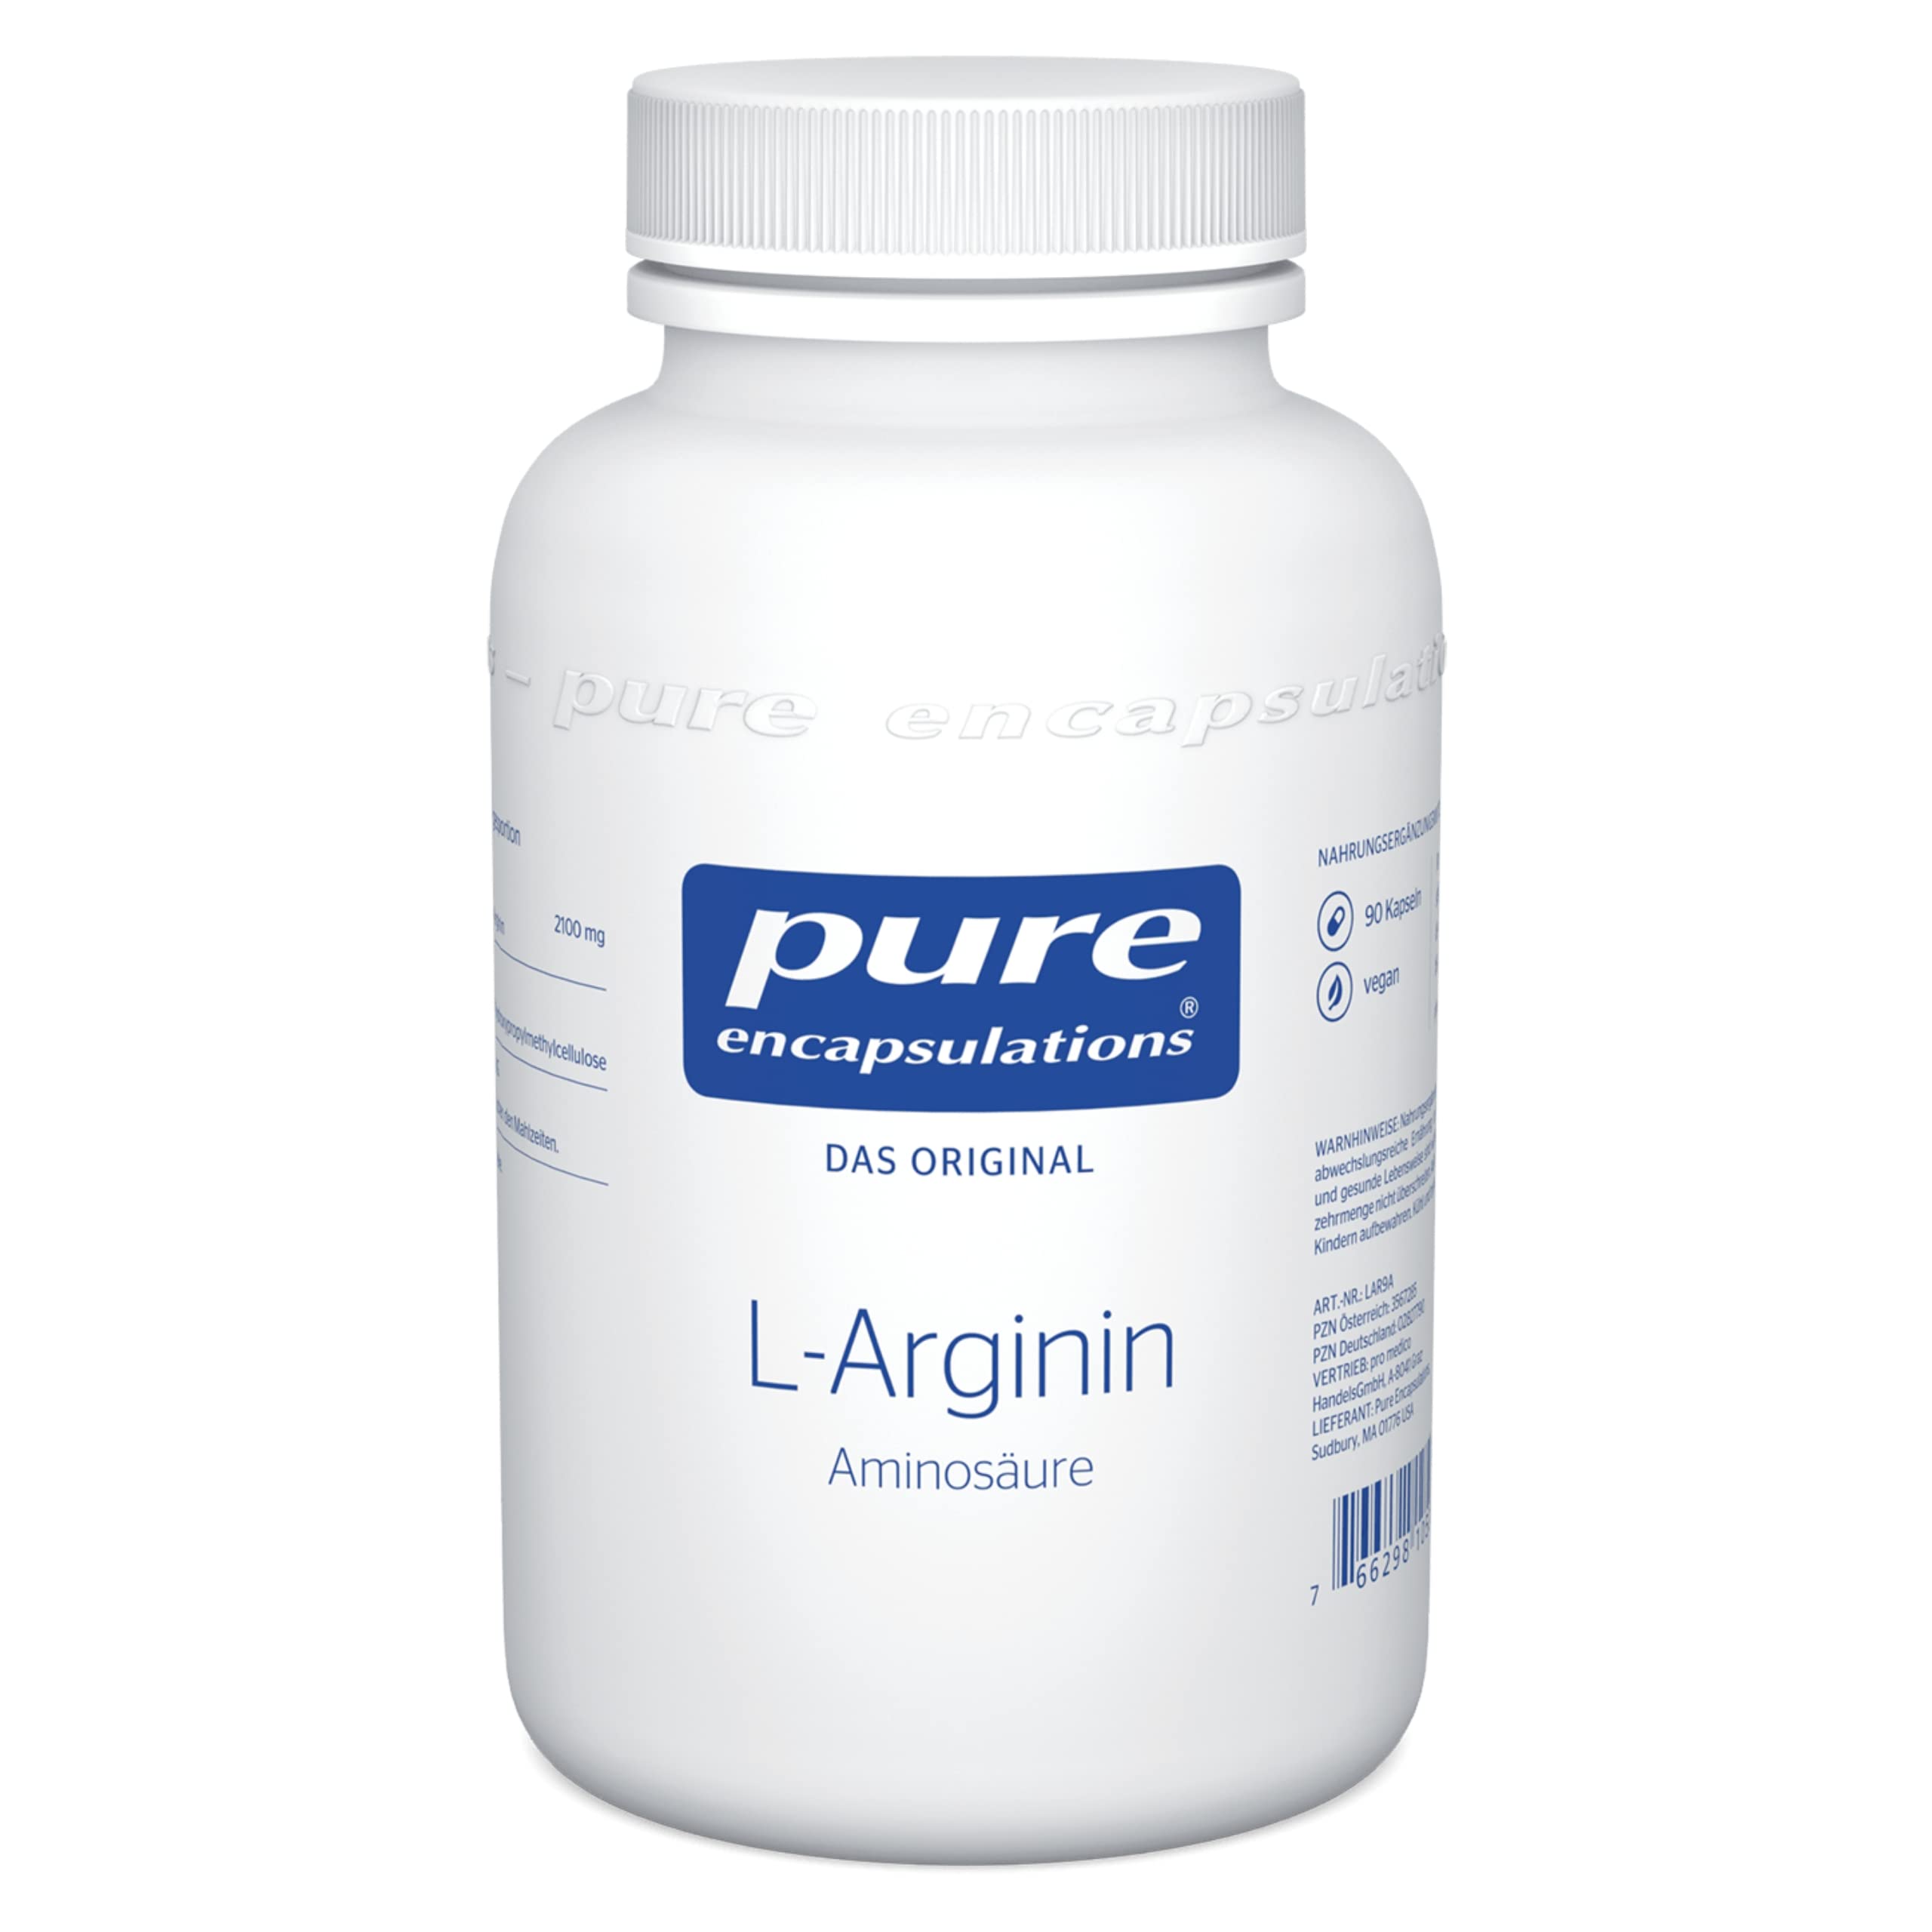 Pure Encapsulations - L-Arginin - Aminosäure - Hypoallergenes Präparat mit hochwertigem L-Arginin - 90 vegane Kapseln